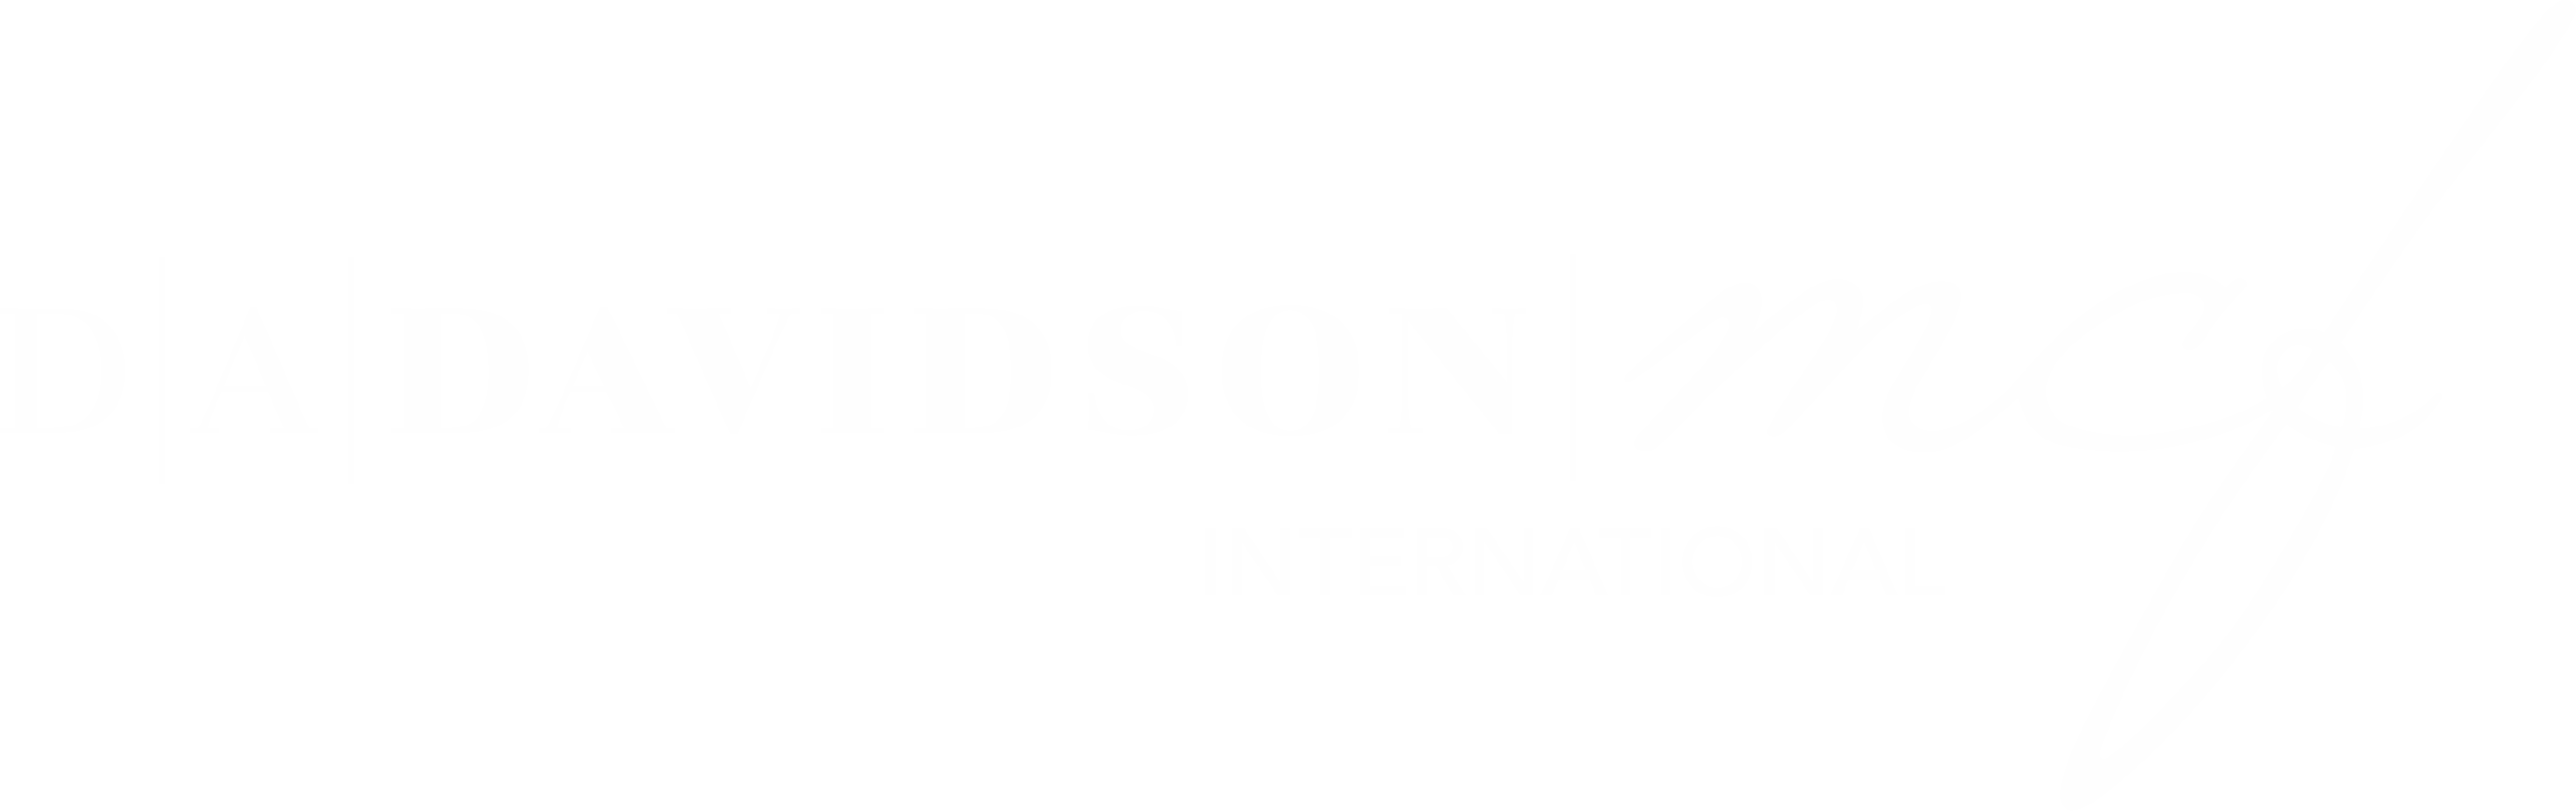 DADAVIDSONmcf internationals